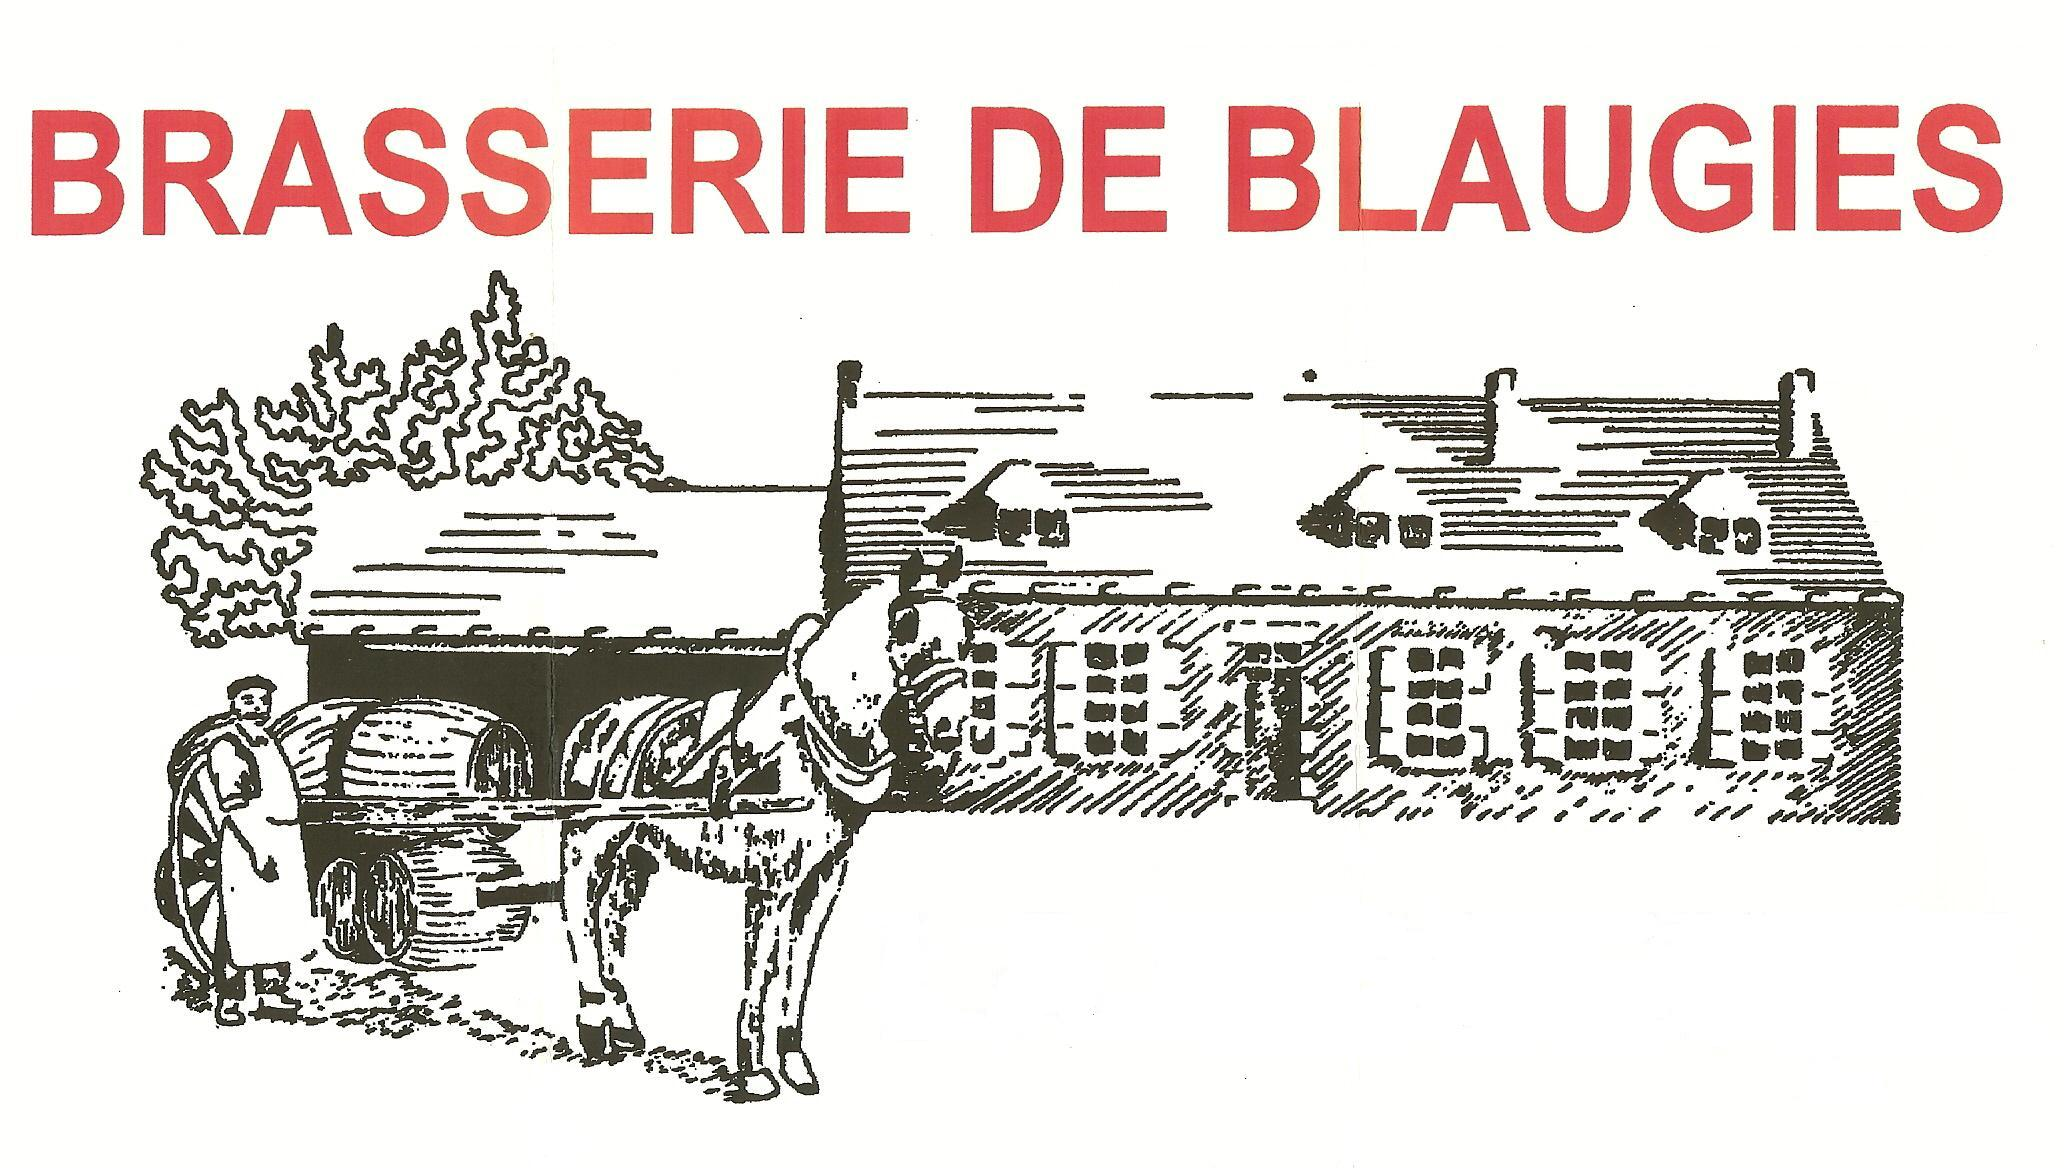 Blaugies Brasserie